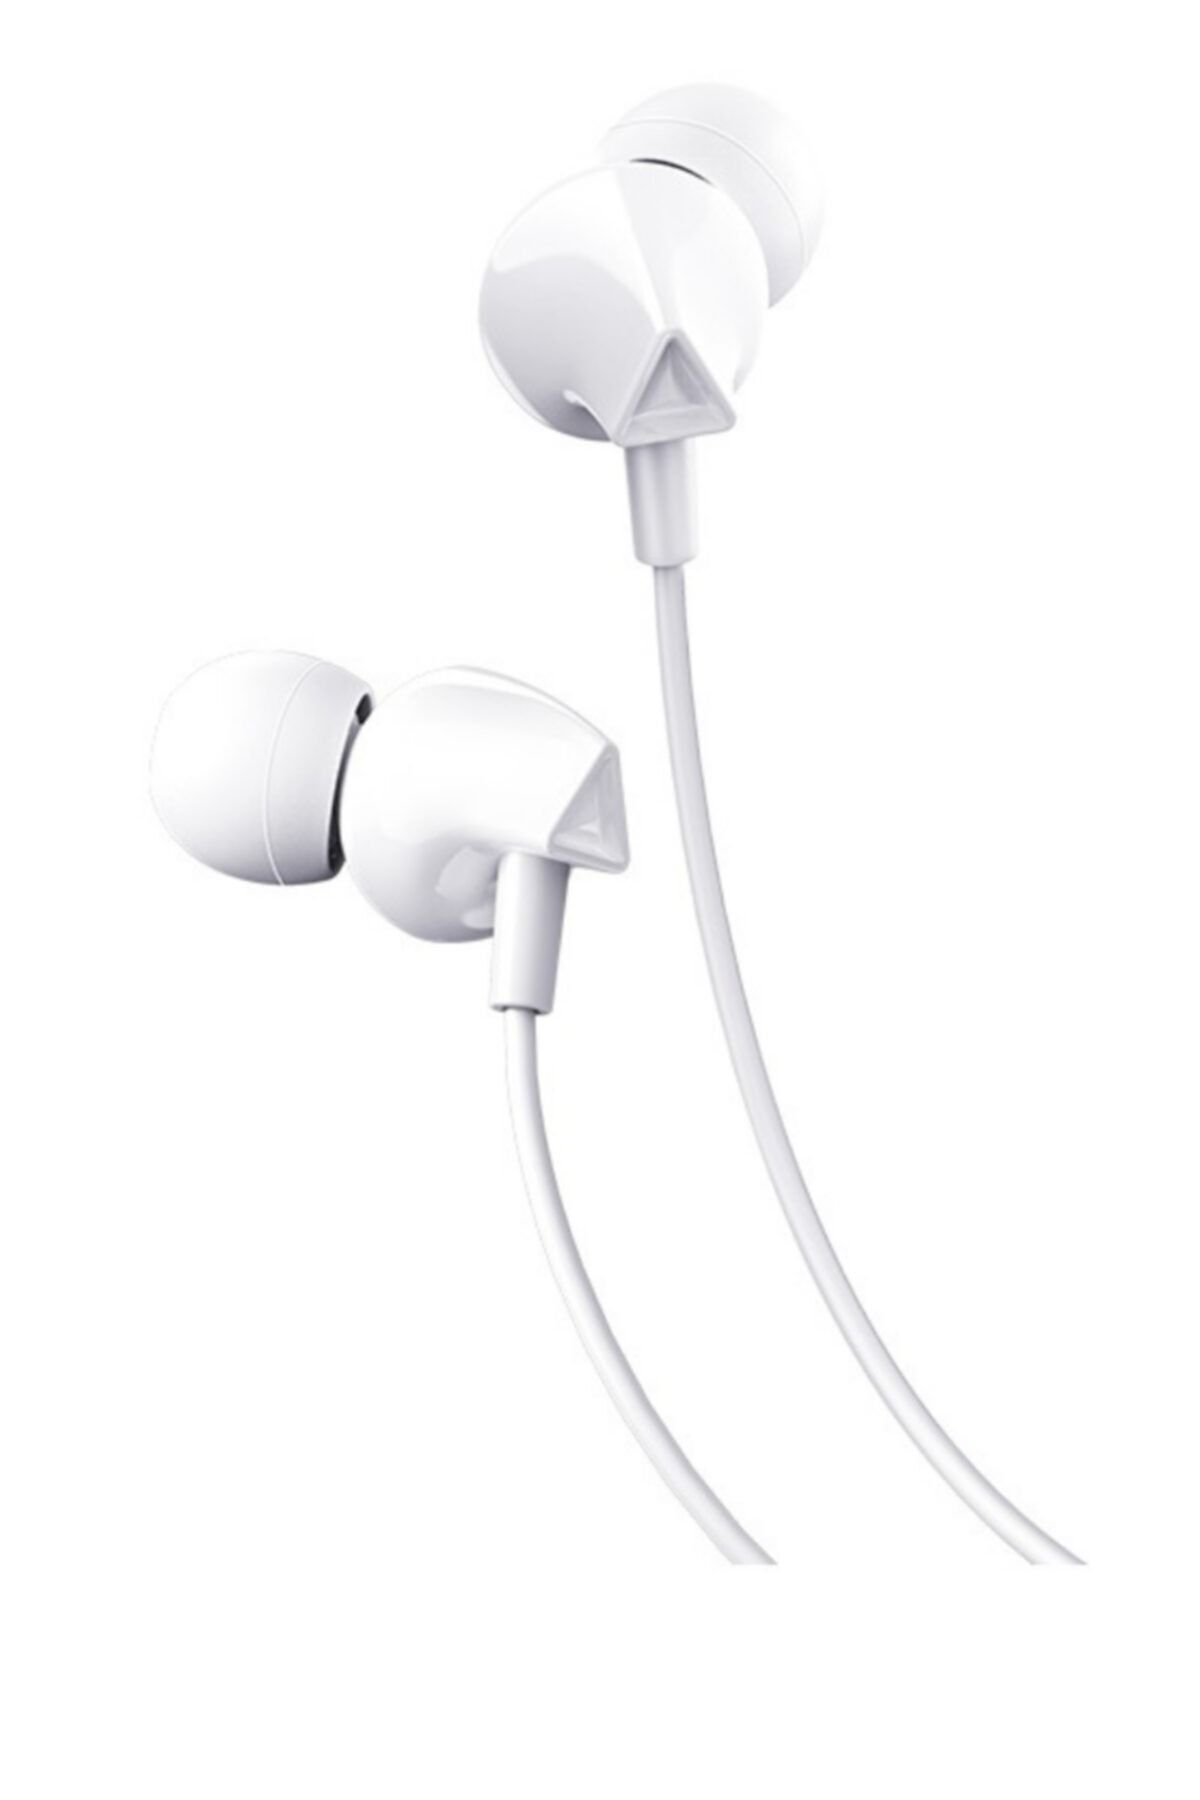 Hoco Beyaz Mikrofonlu Stereo Kulakiçi Kablolu Kulaklık M60 3.5 mm